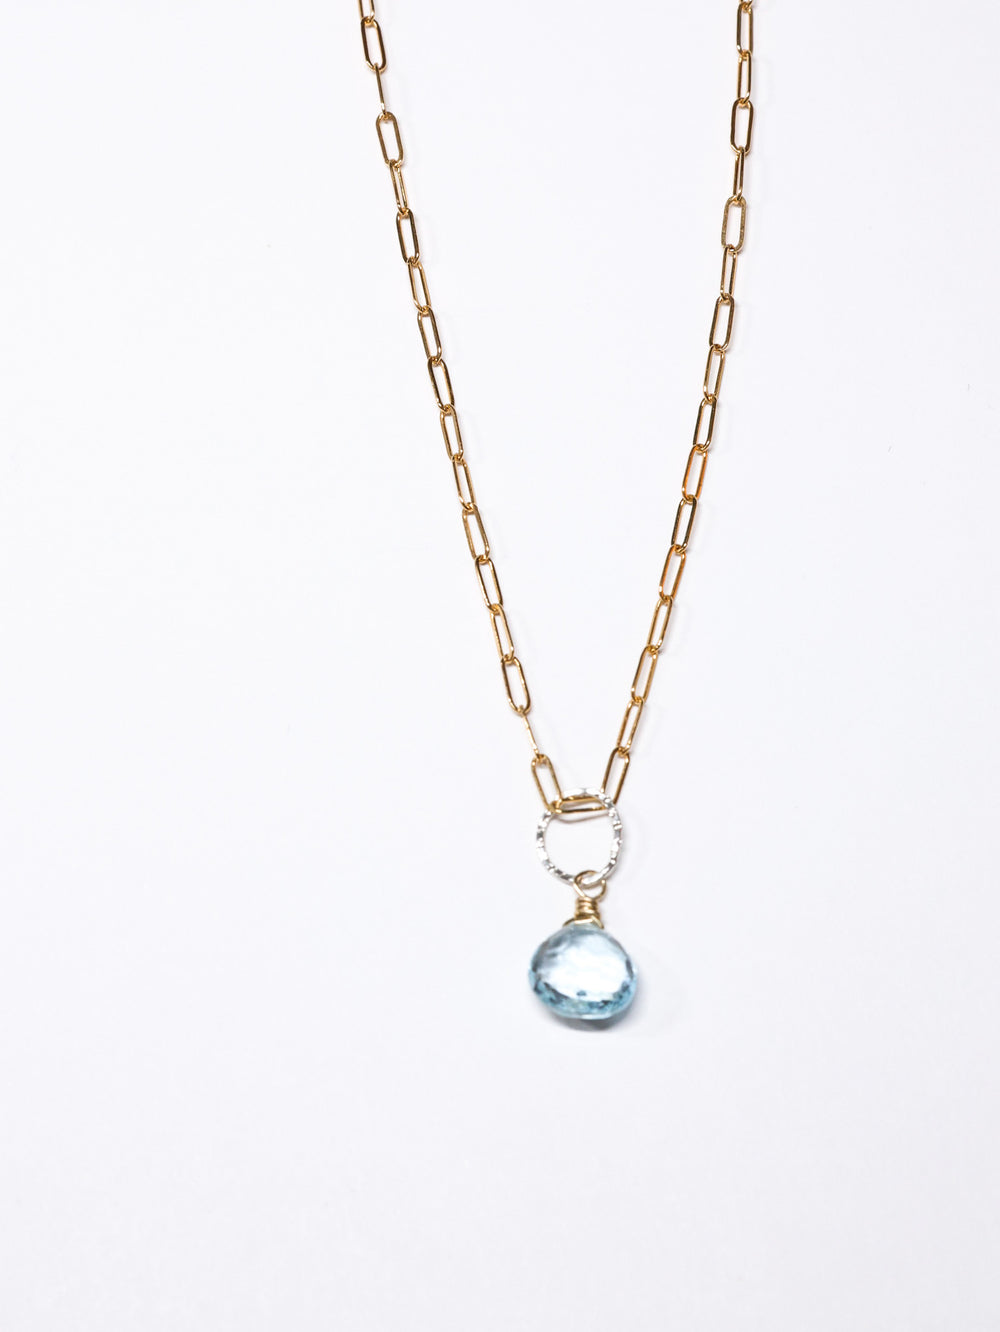 Sky Blue Topaz pendant necklace -gold filled